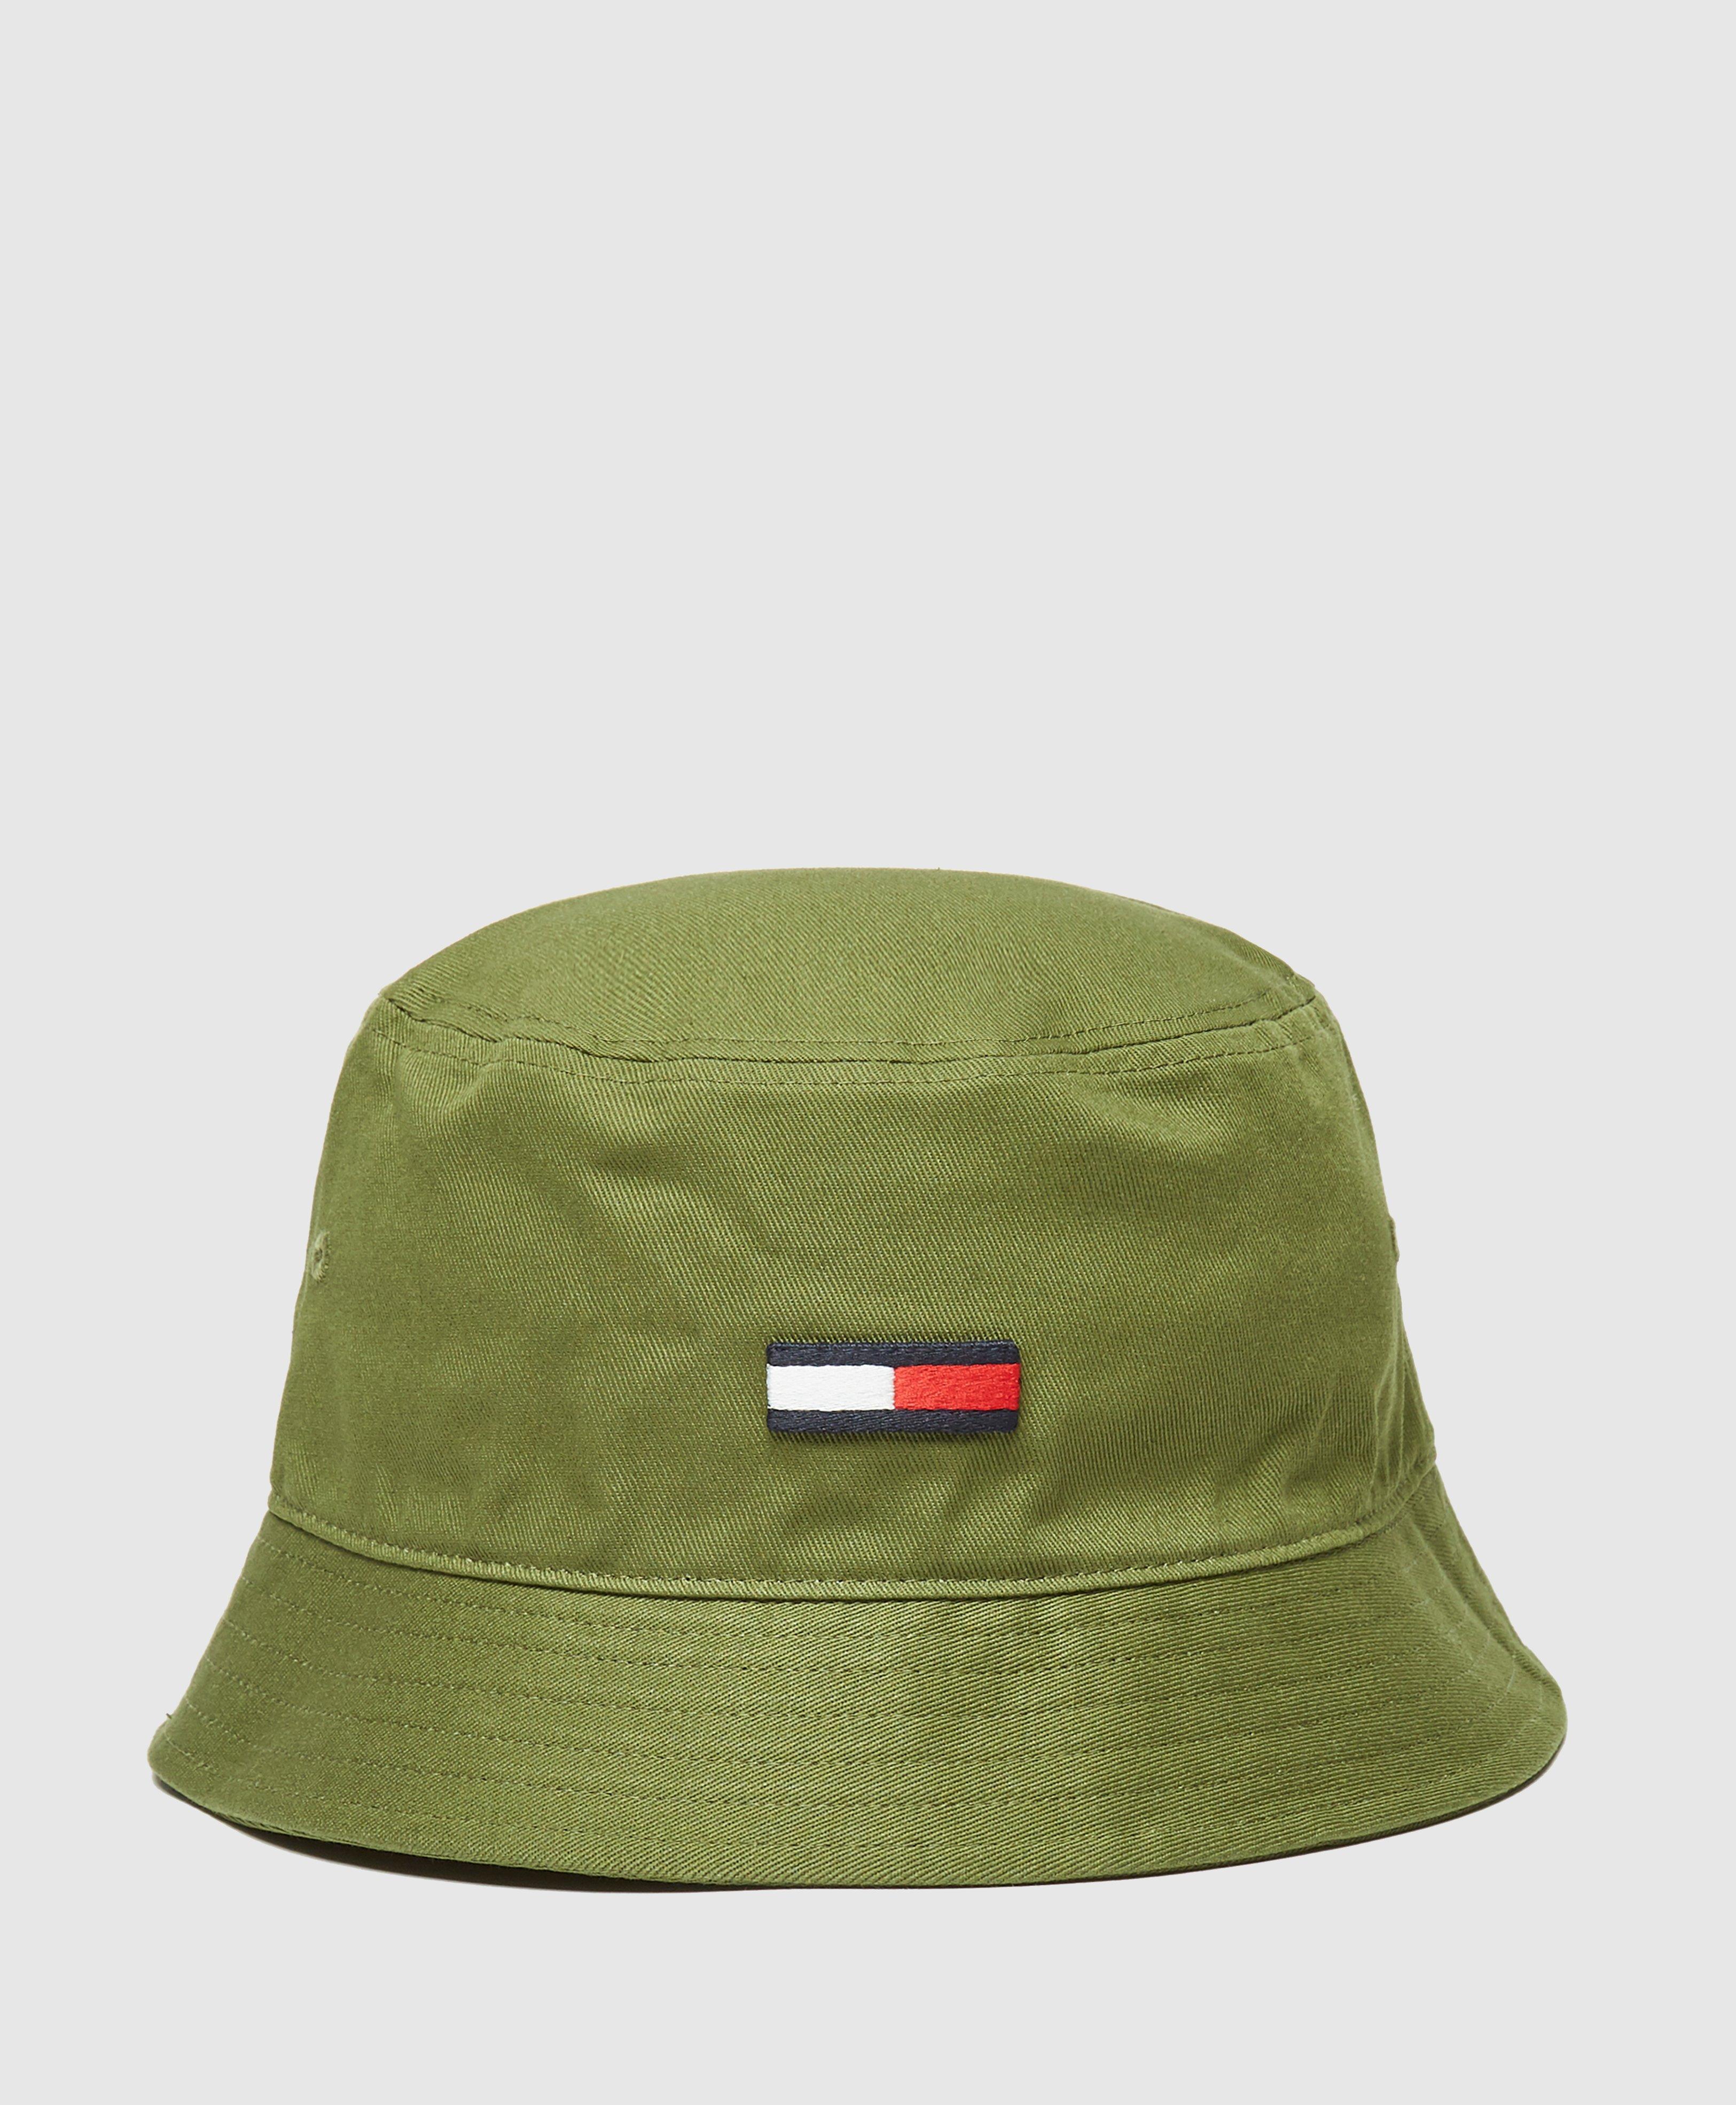 tommy hilfiger green hat